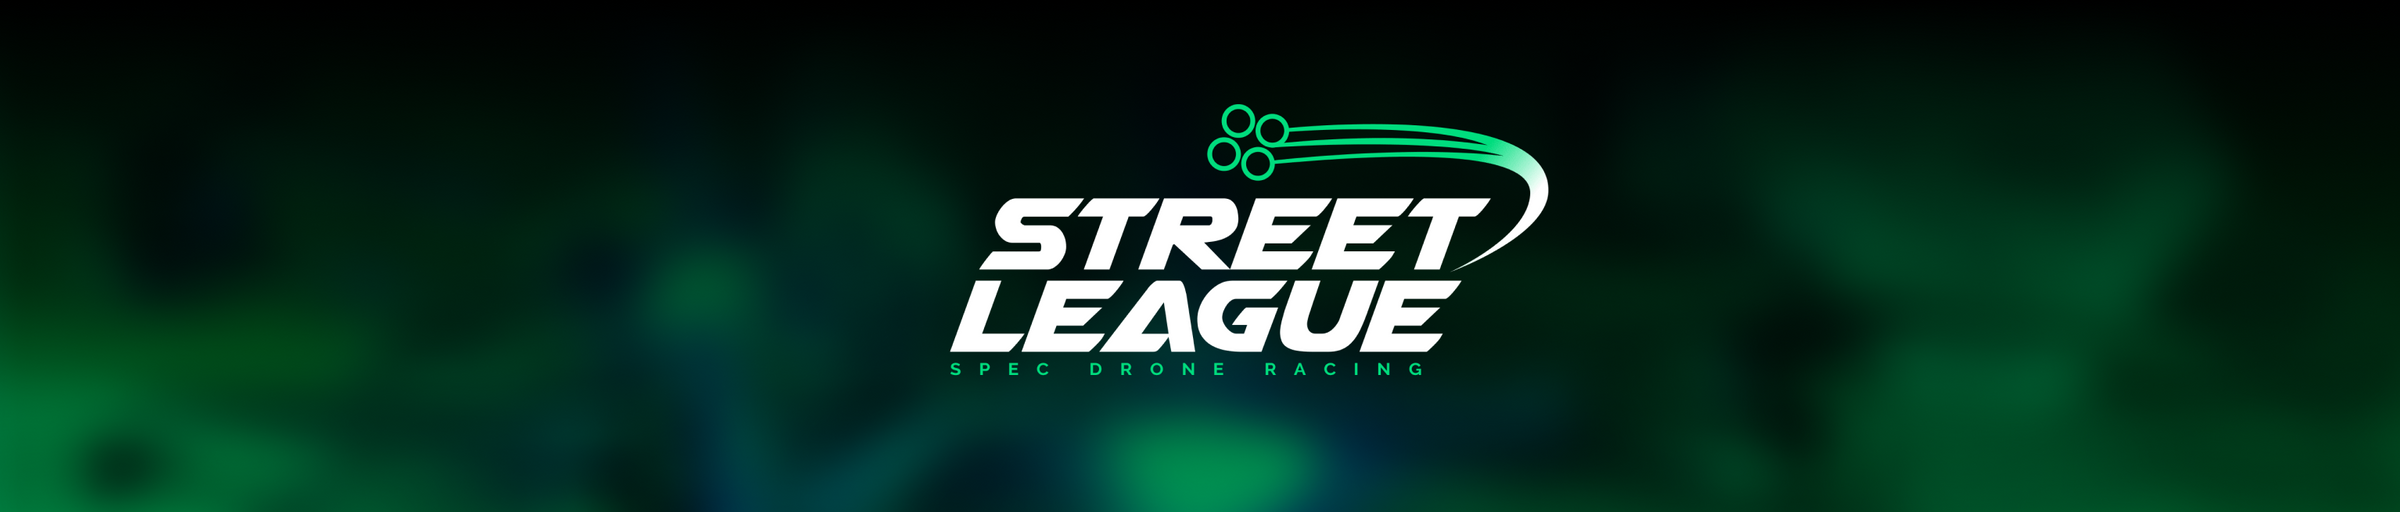 Street League Spec Drone Racing